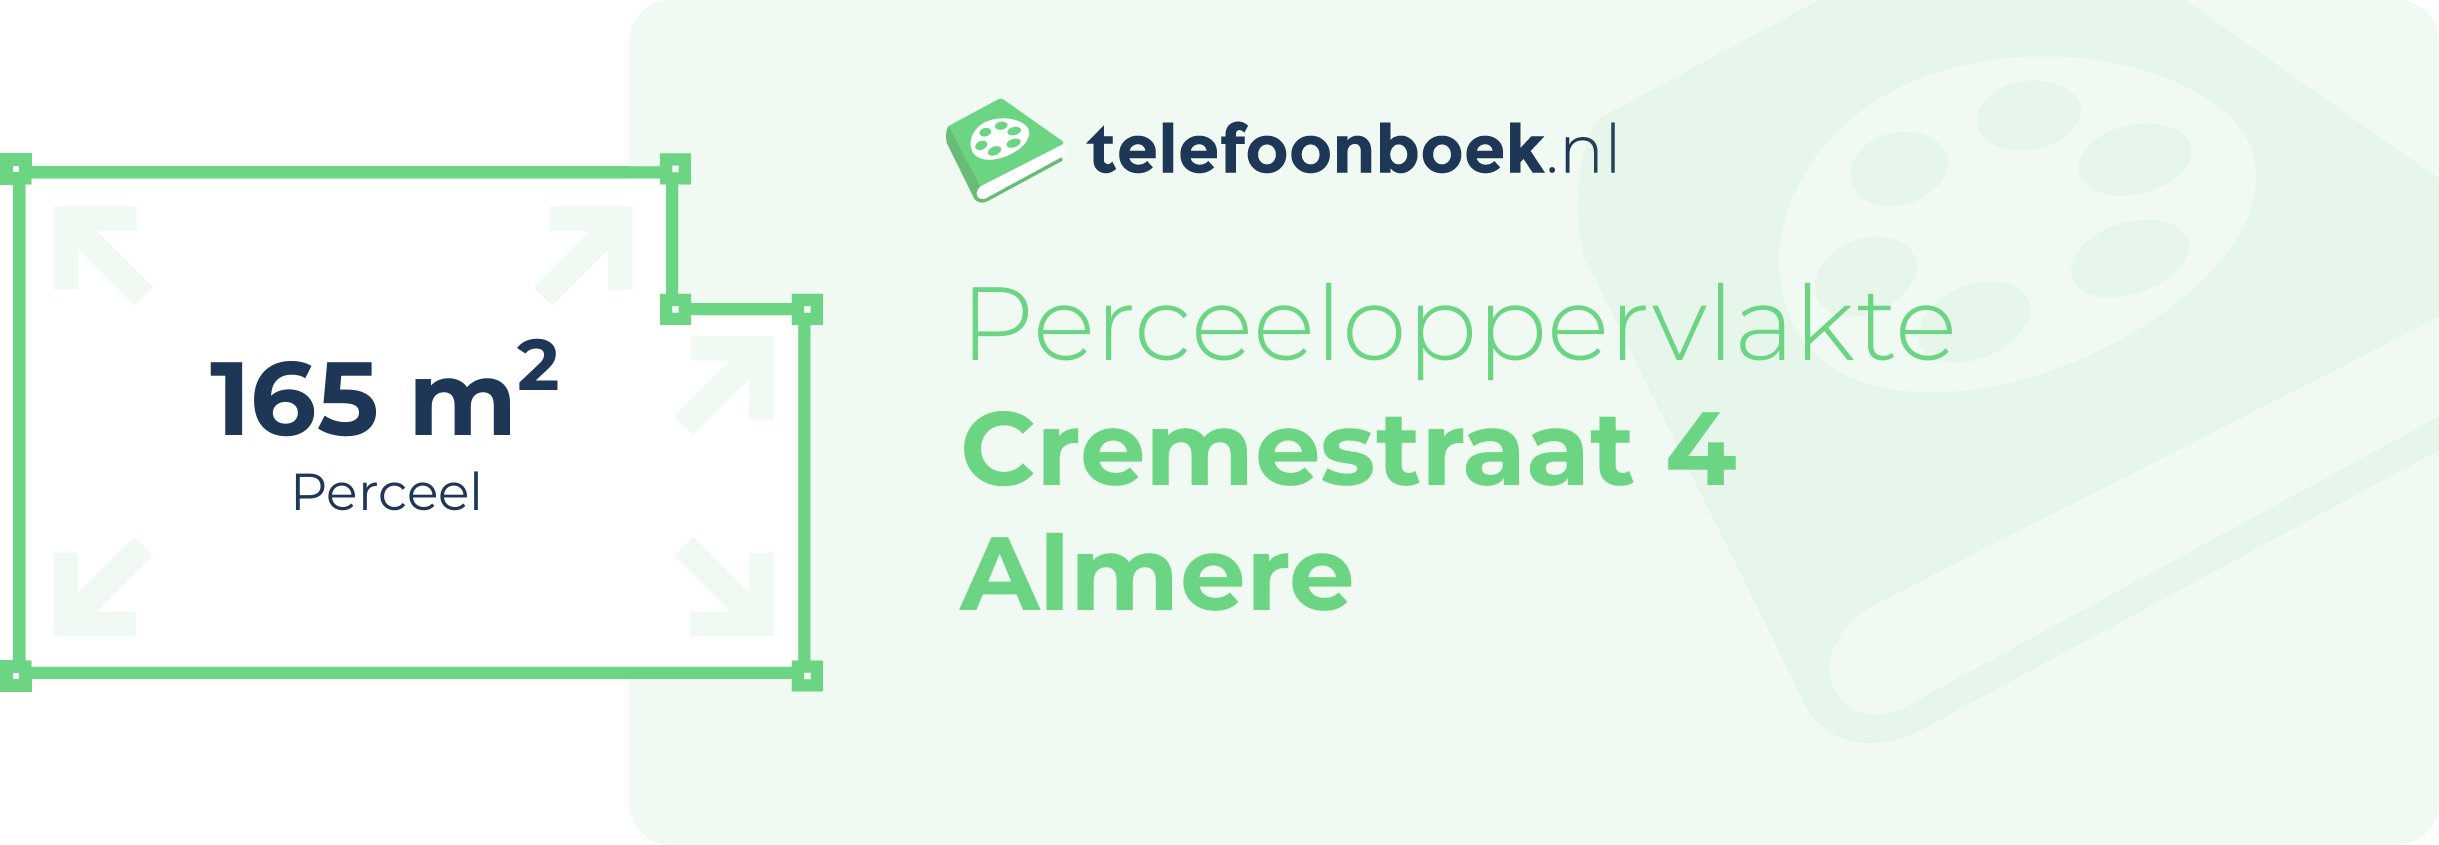 Perceeloppervlakte Cremestraat 4 Almere